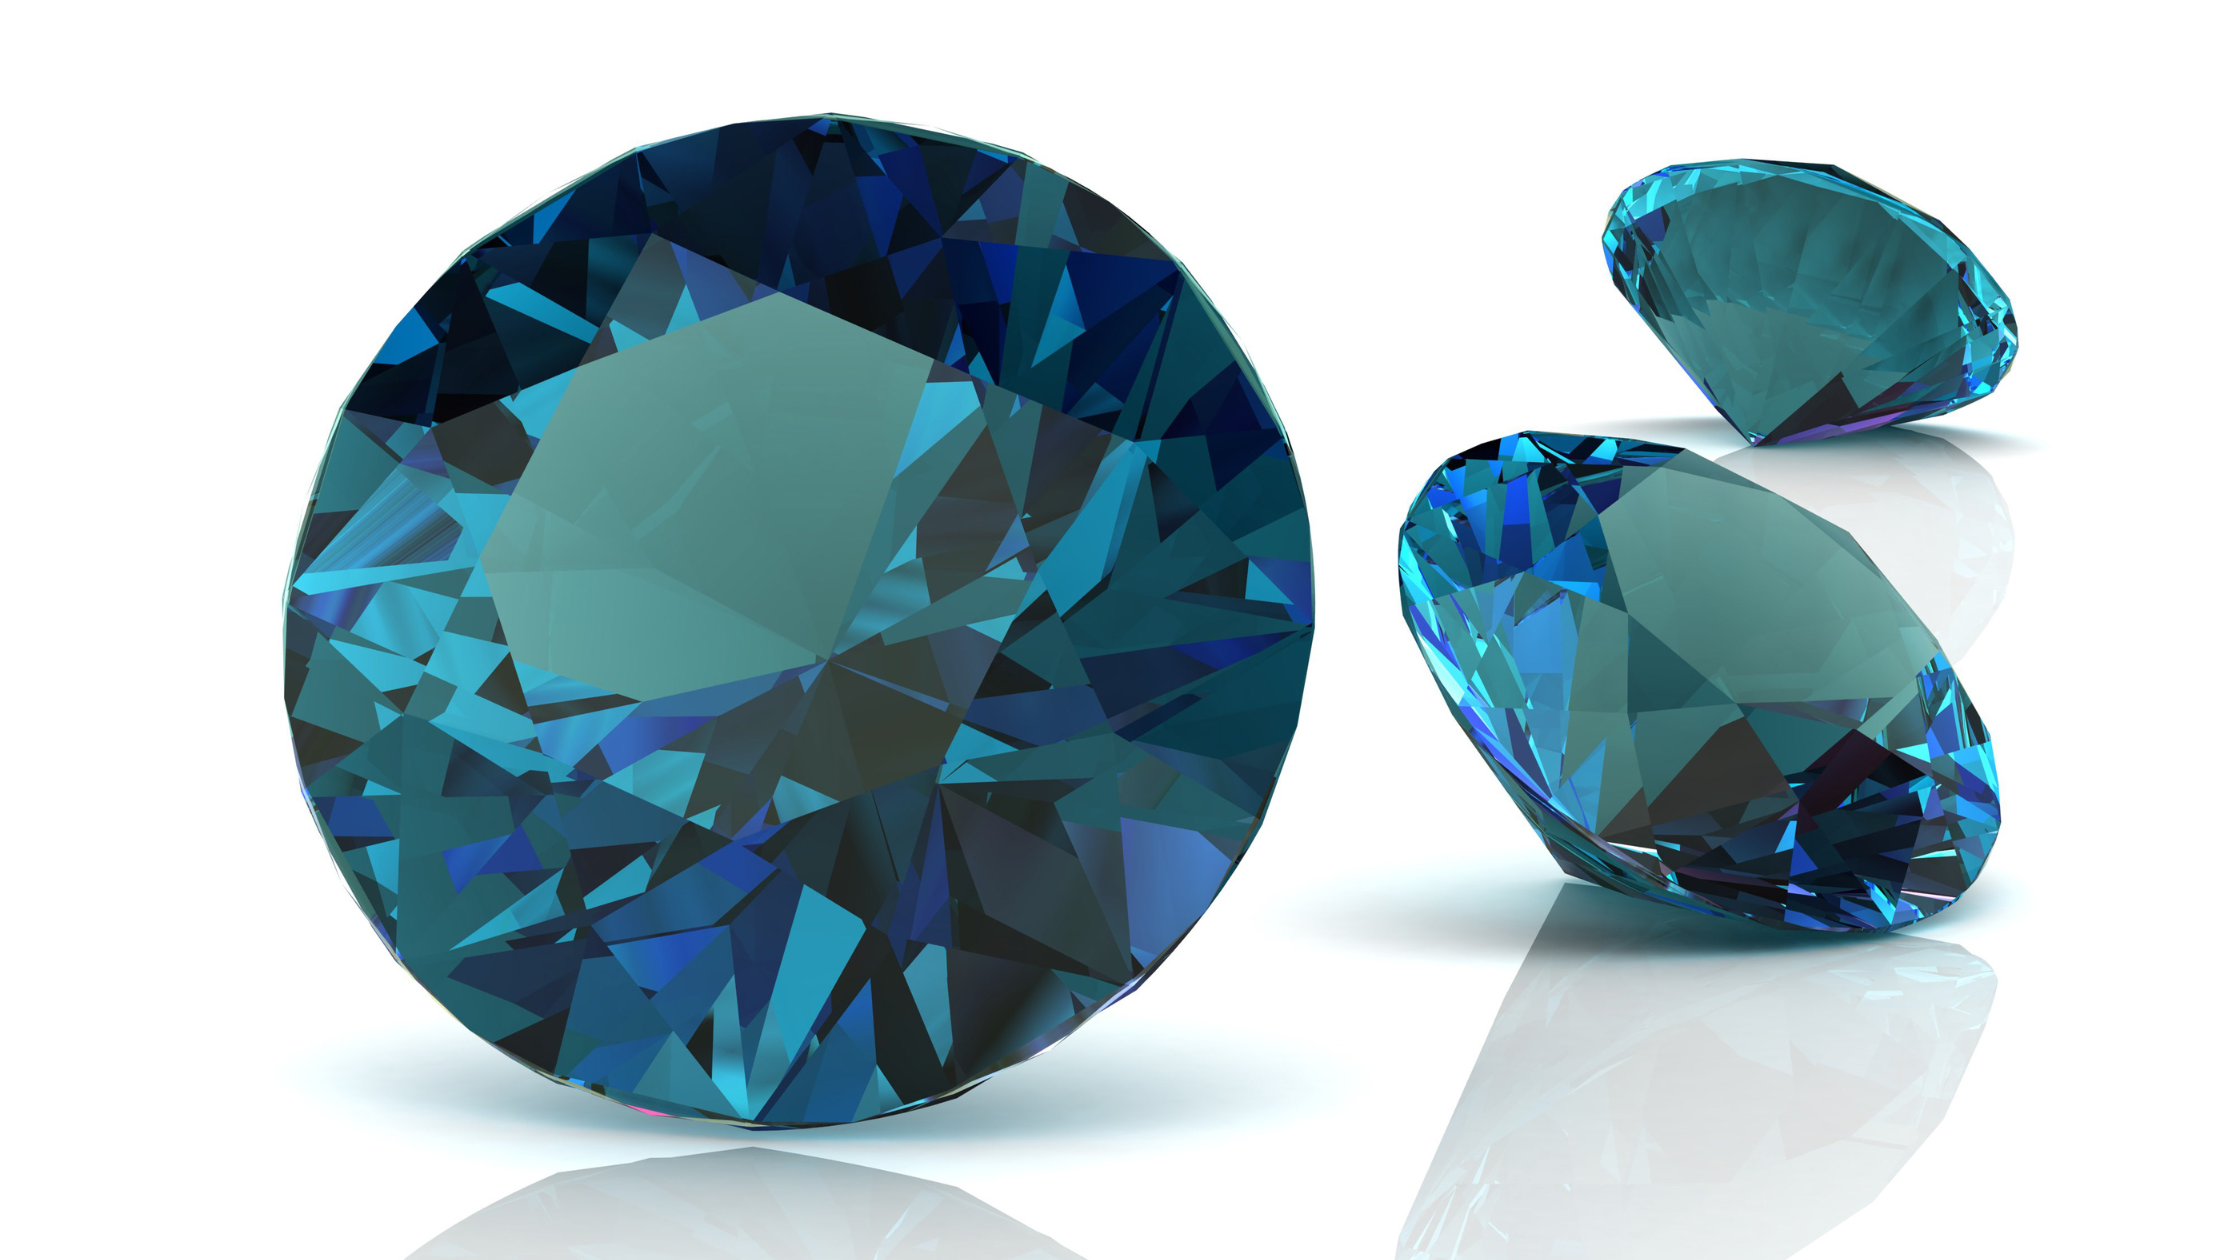 A photo of three alexandrite gemstones